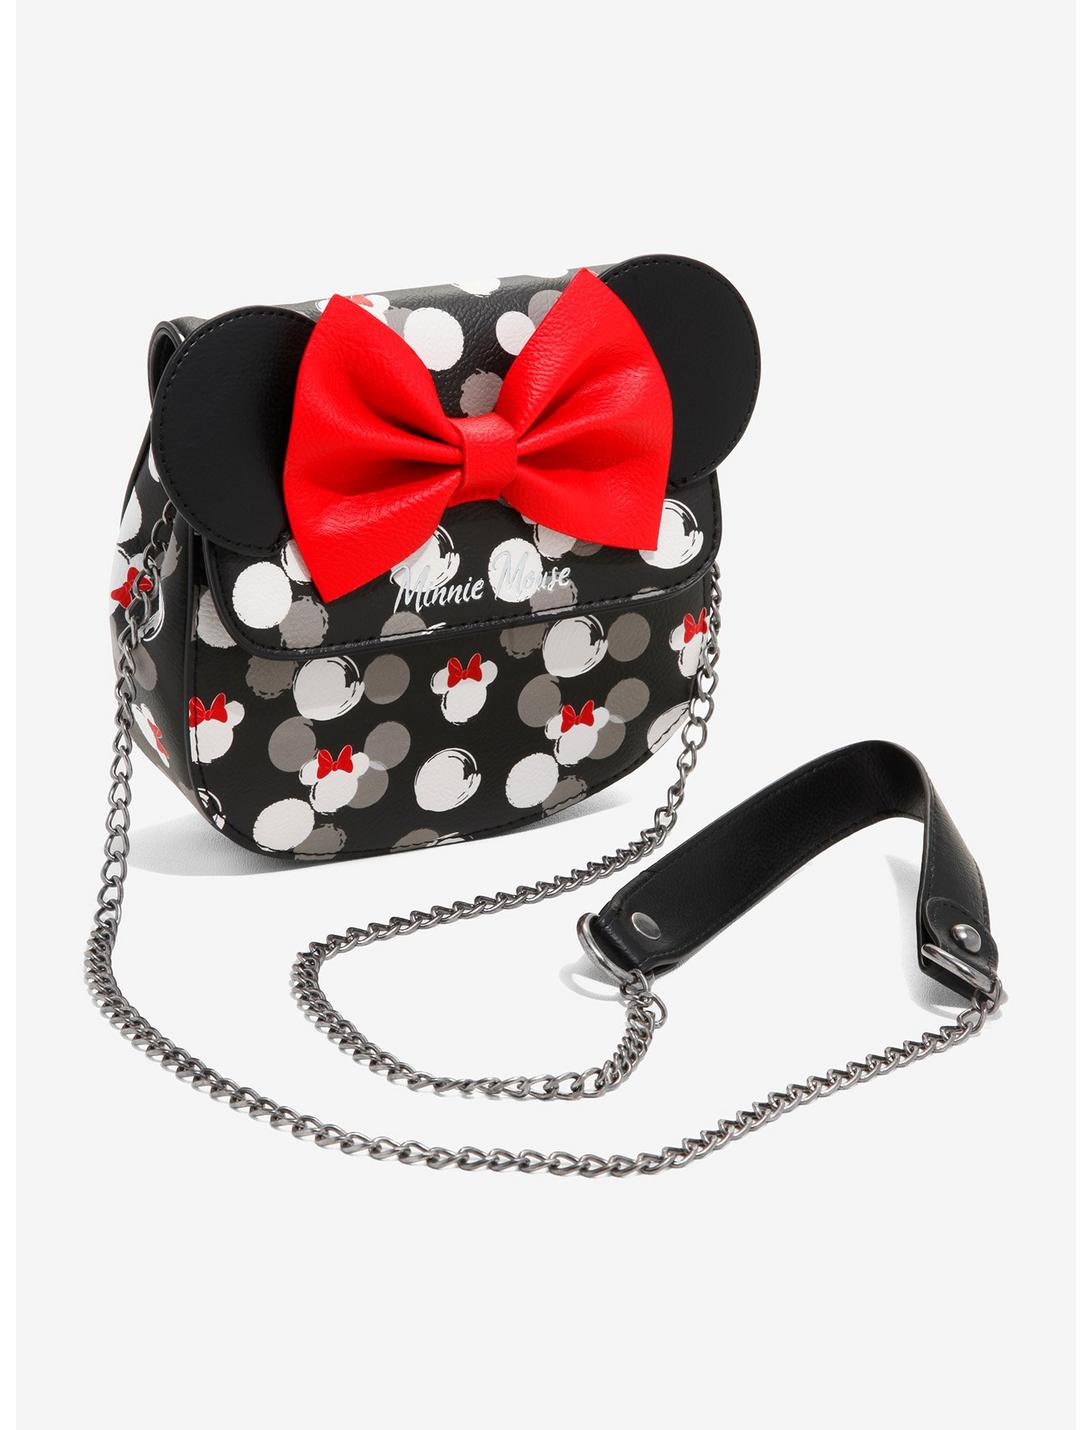 Loungefly Disney Minnie Mouse Polka Dots Crossbody Bag, , hi-res